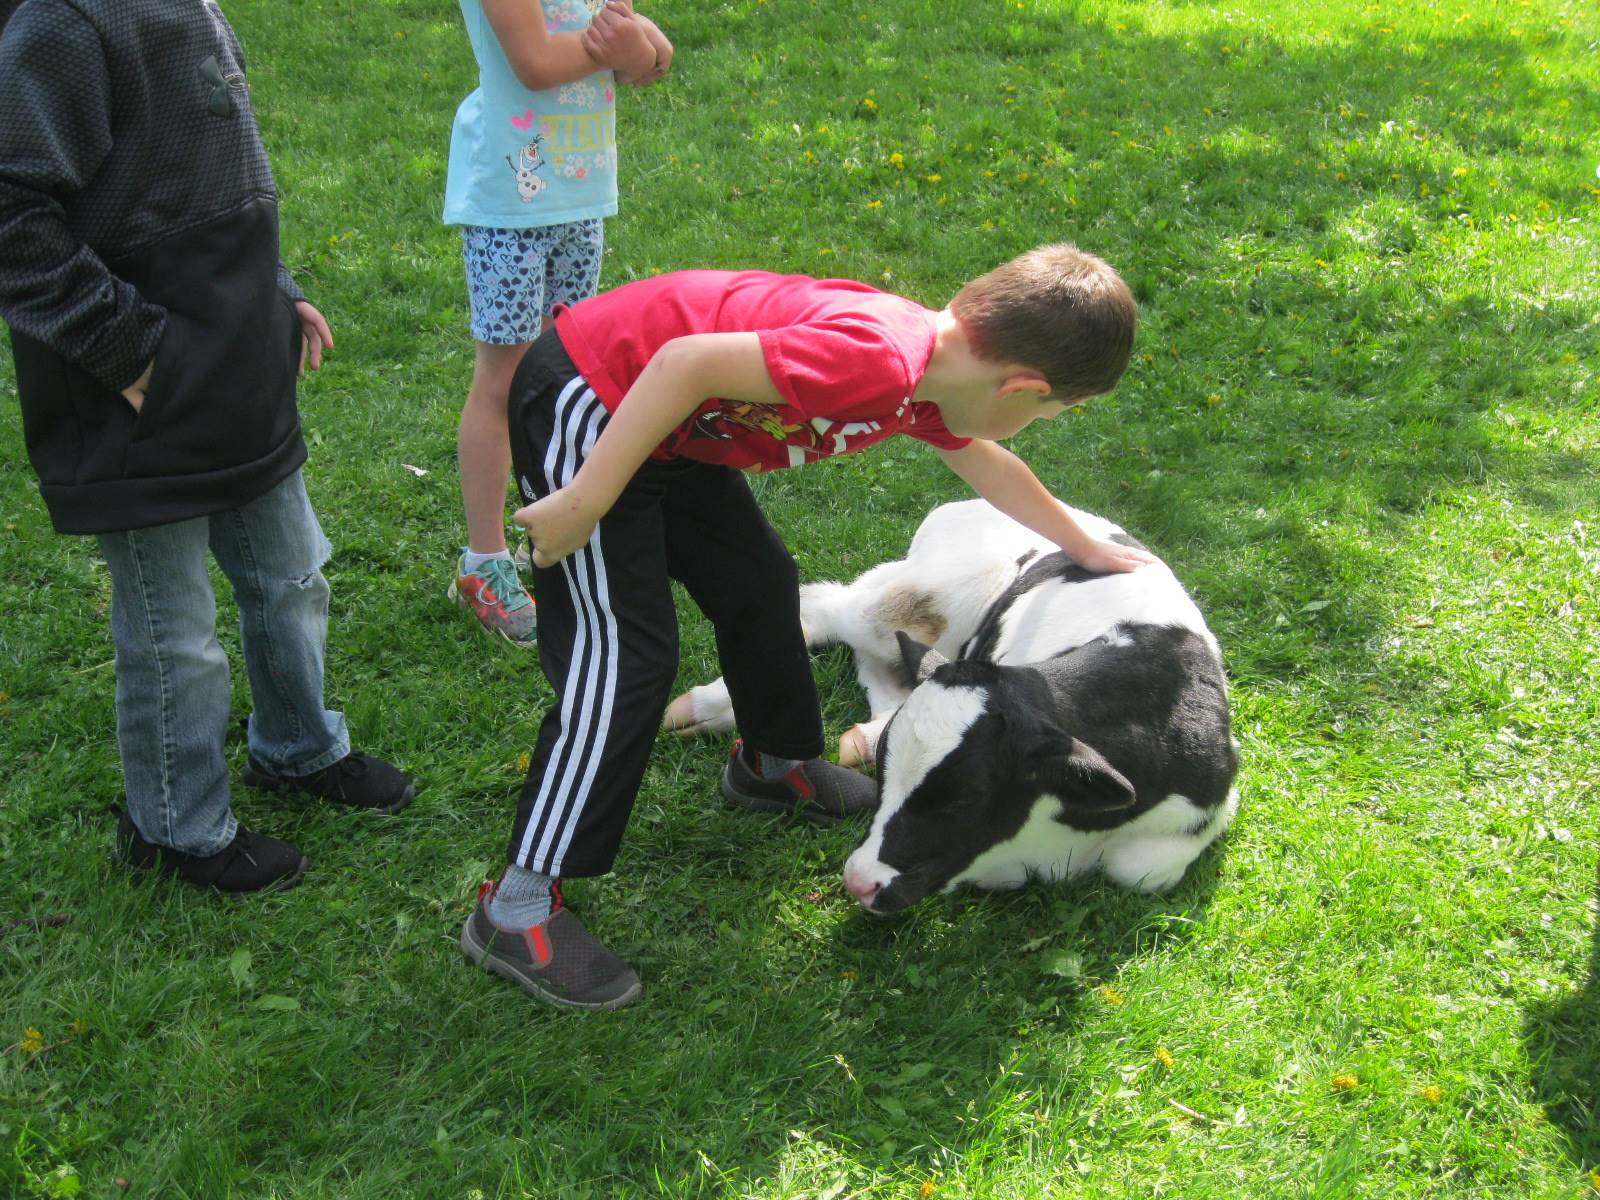 Student pets a calf named Oliver